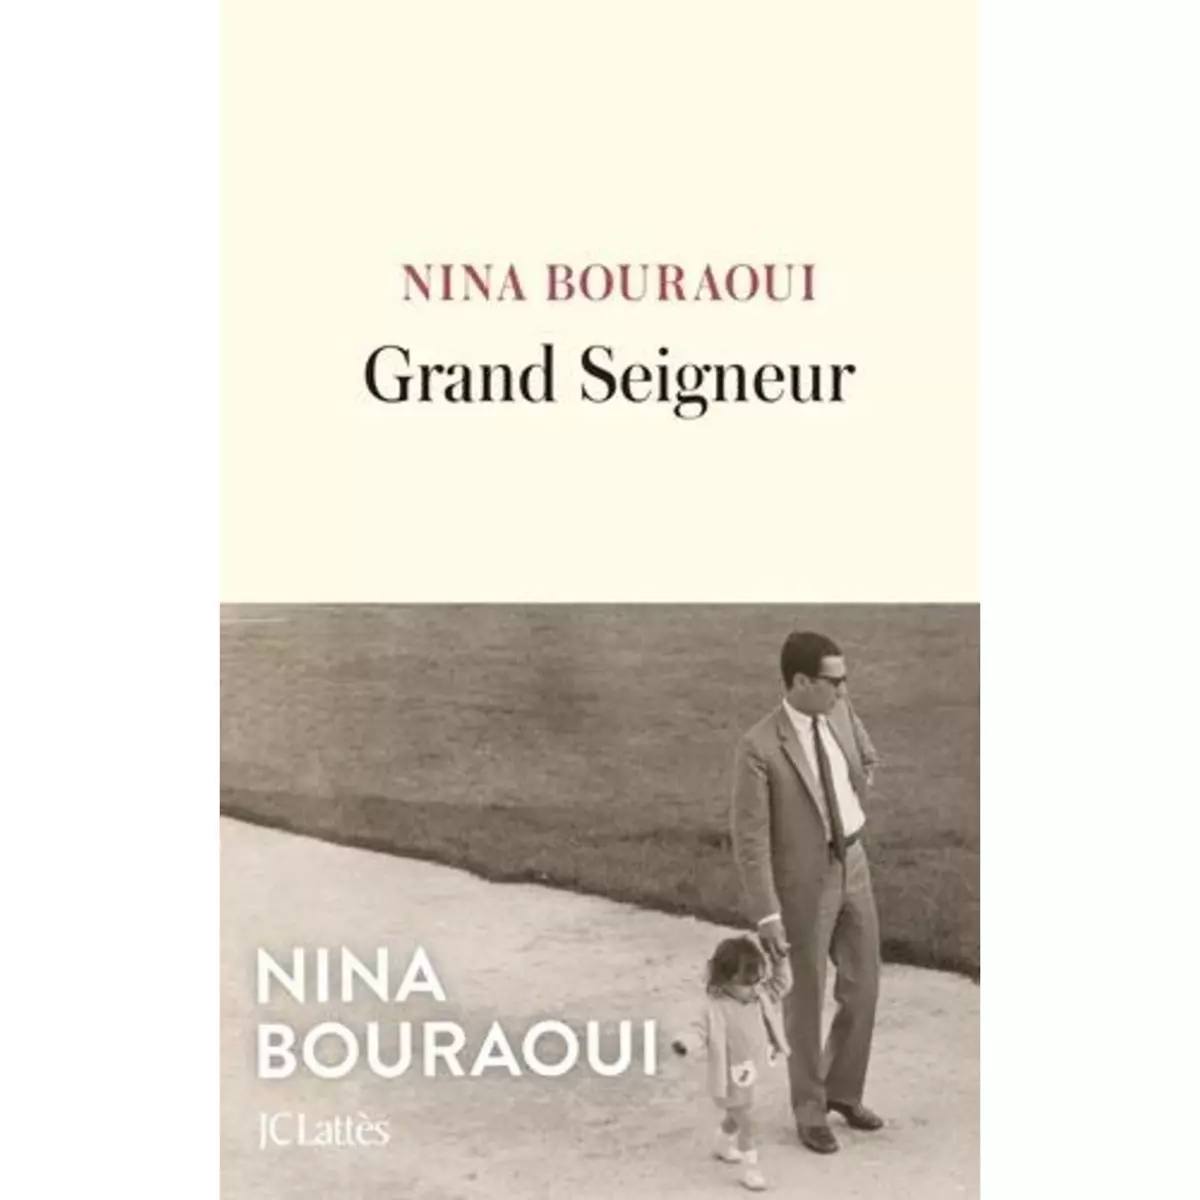  GRAND SEIGNEUR, Bouraoui Nina